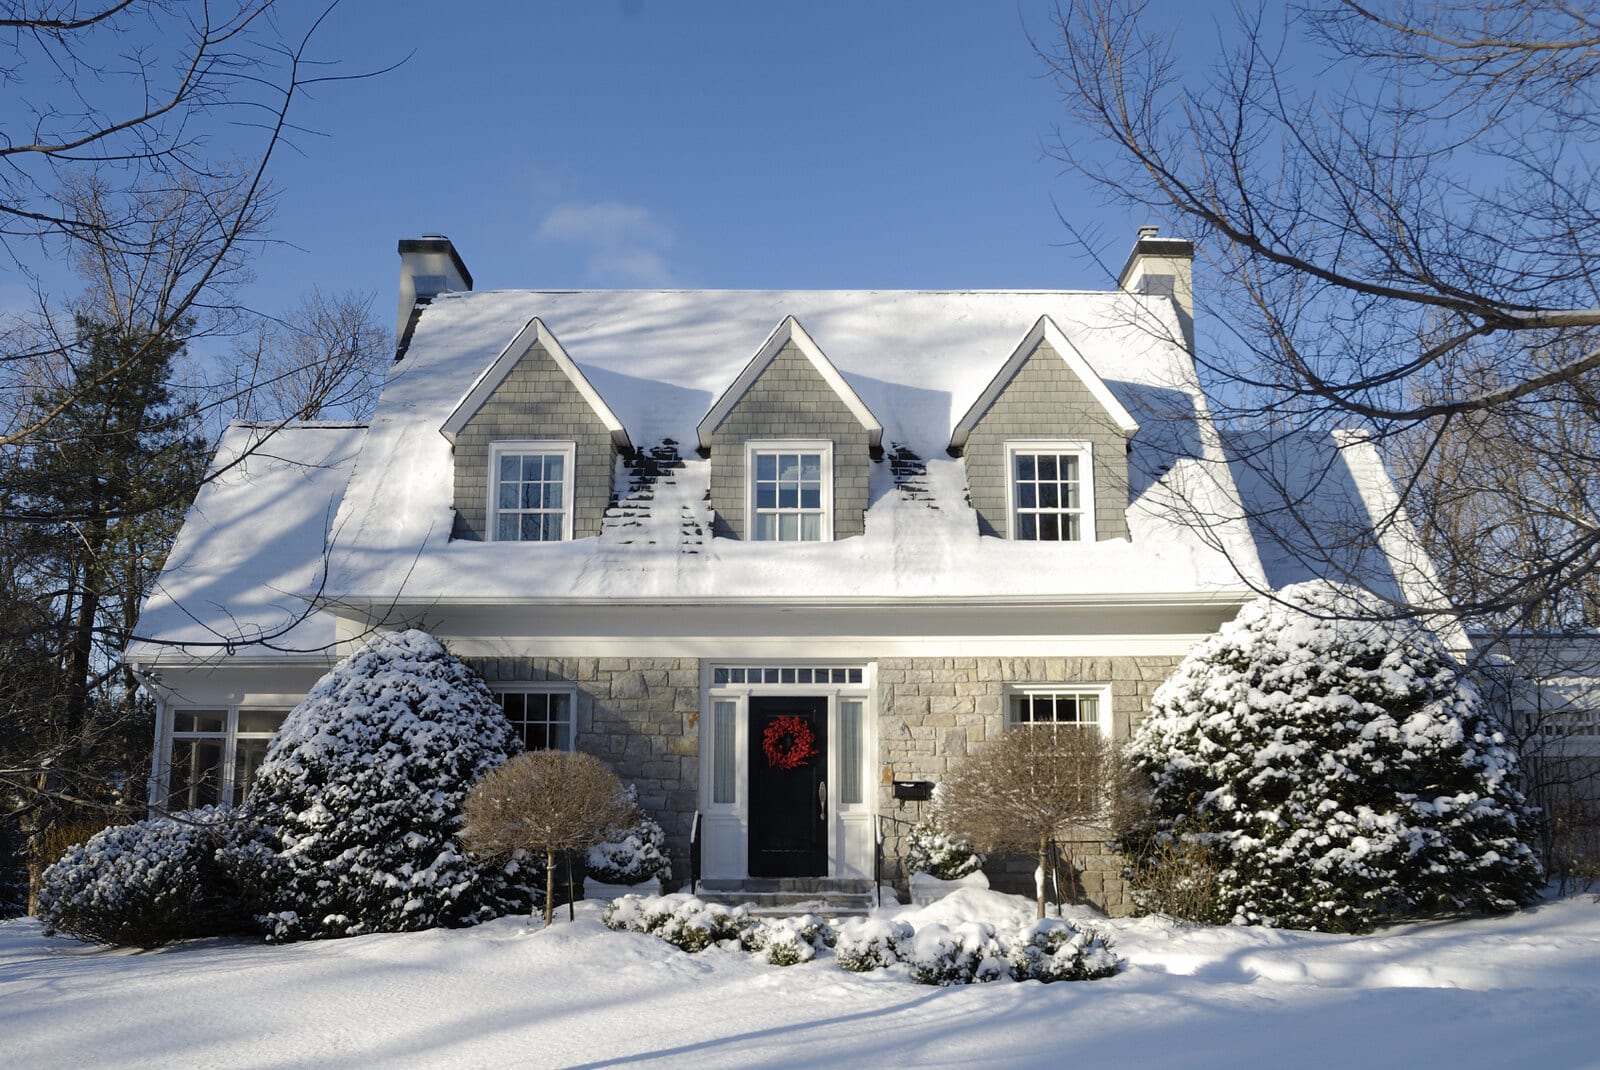 5 Easy Landscape Care Tips for the Winter Season